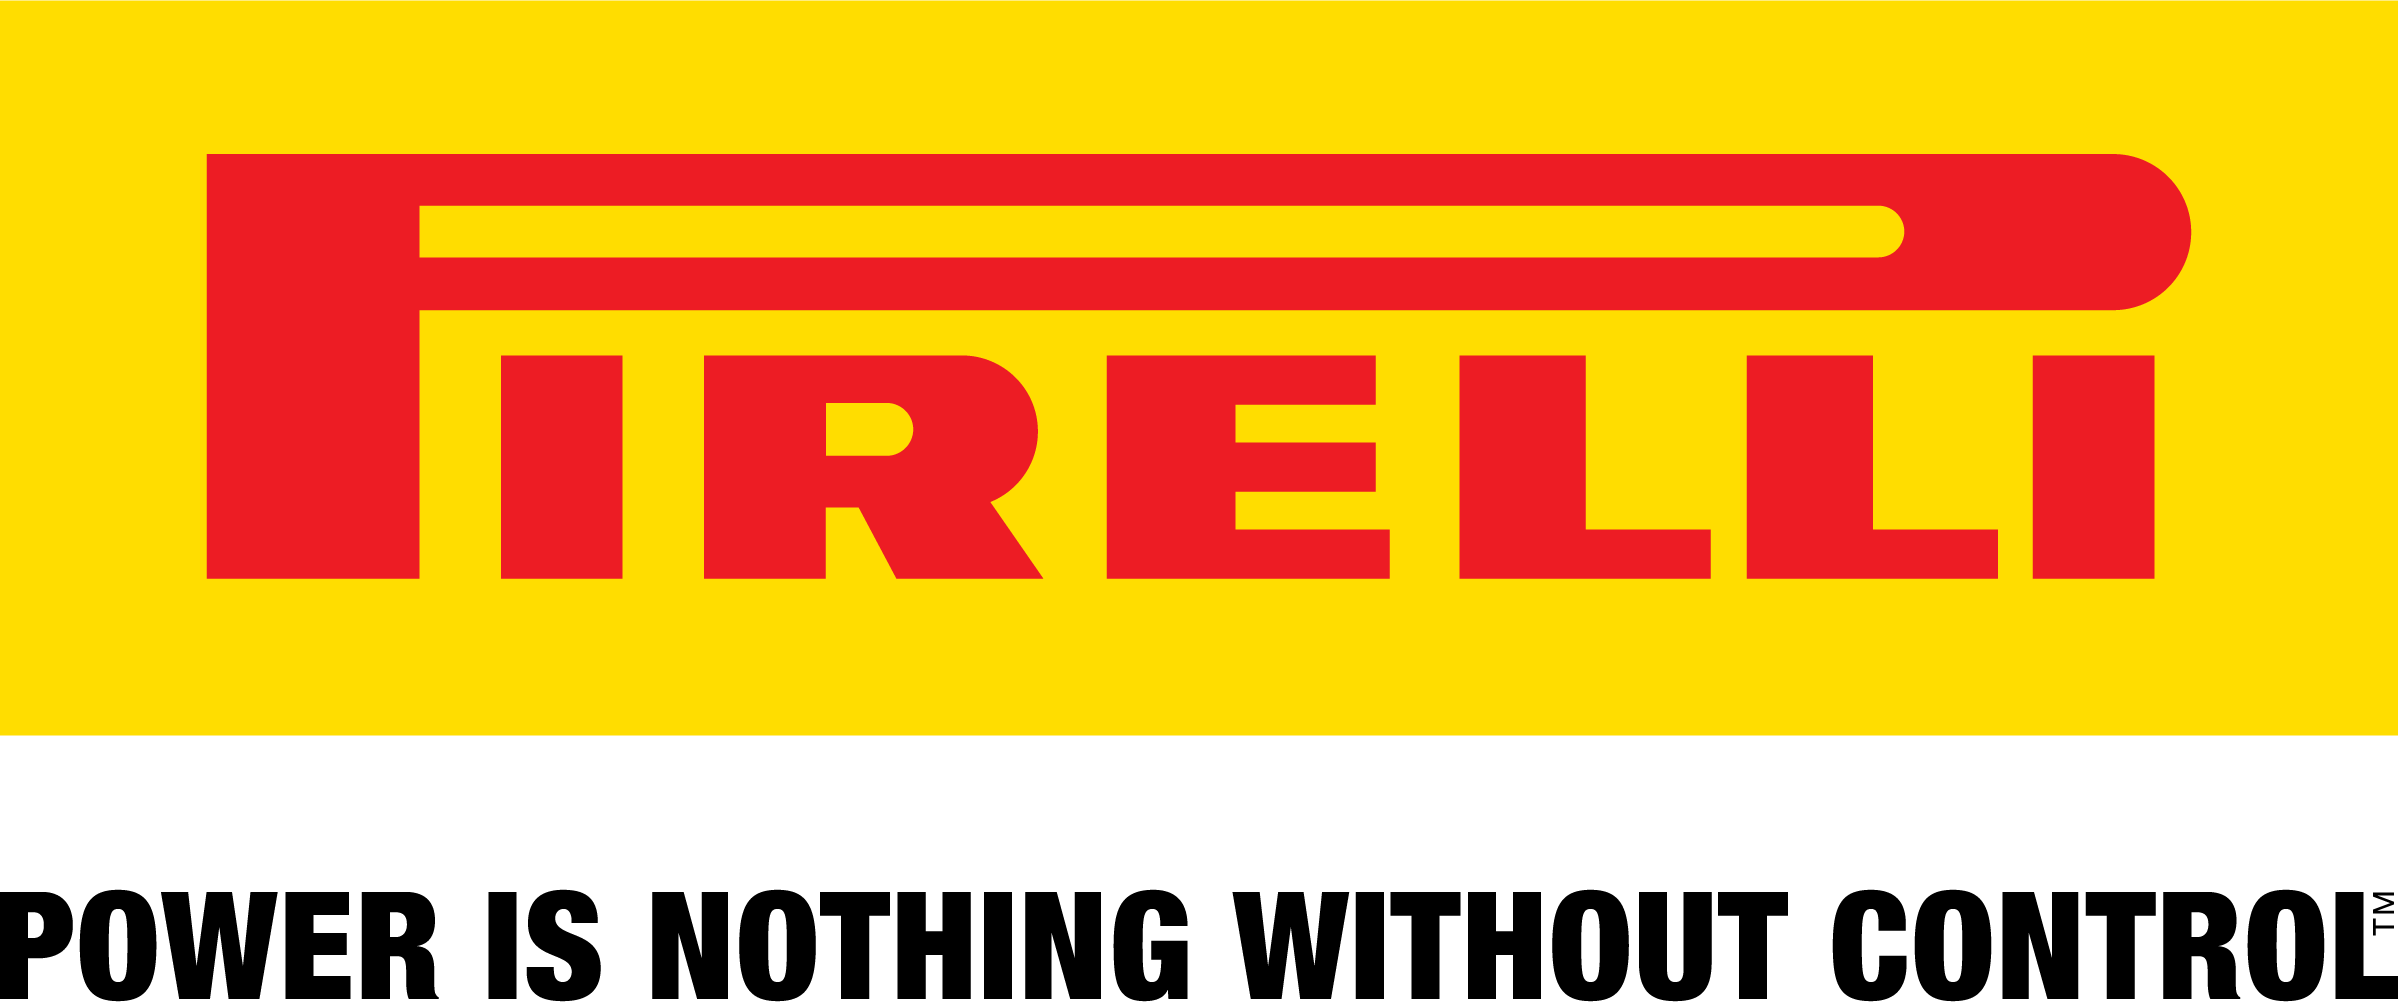 Pirelli logo with payoff